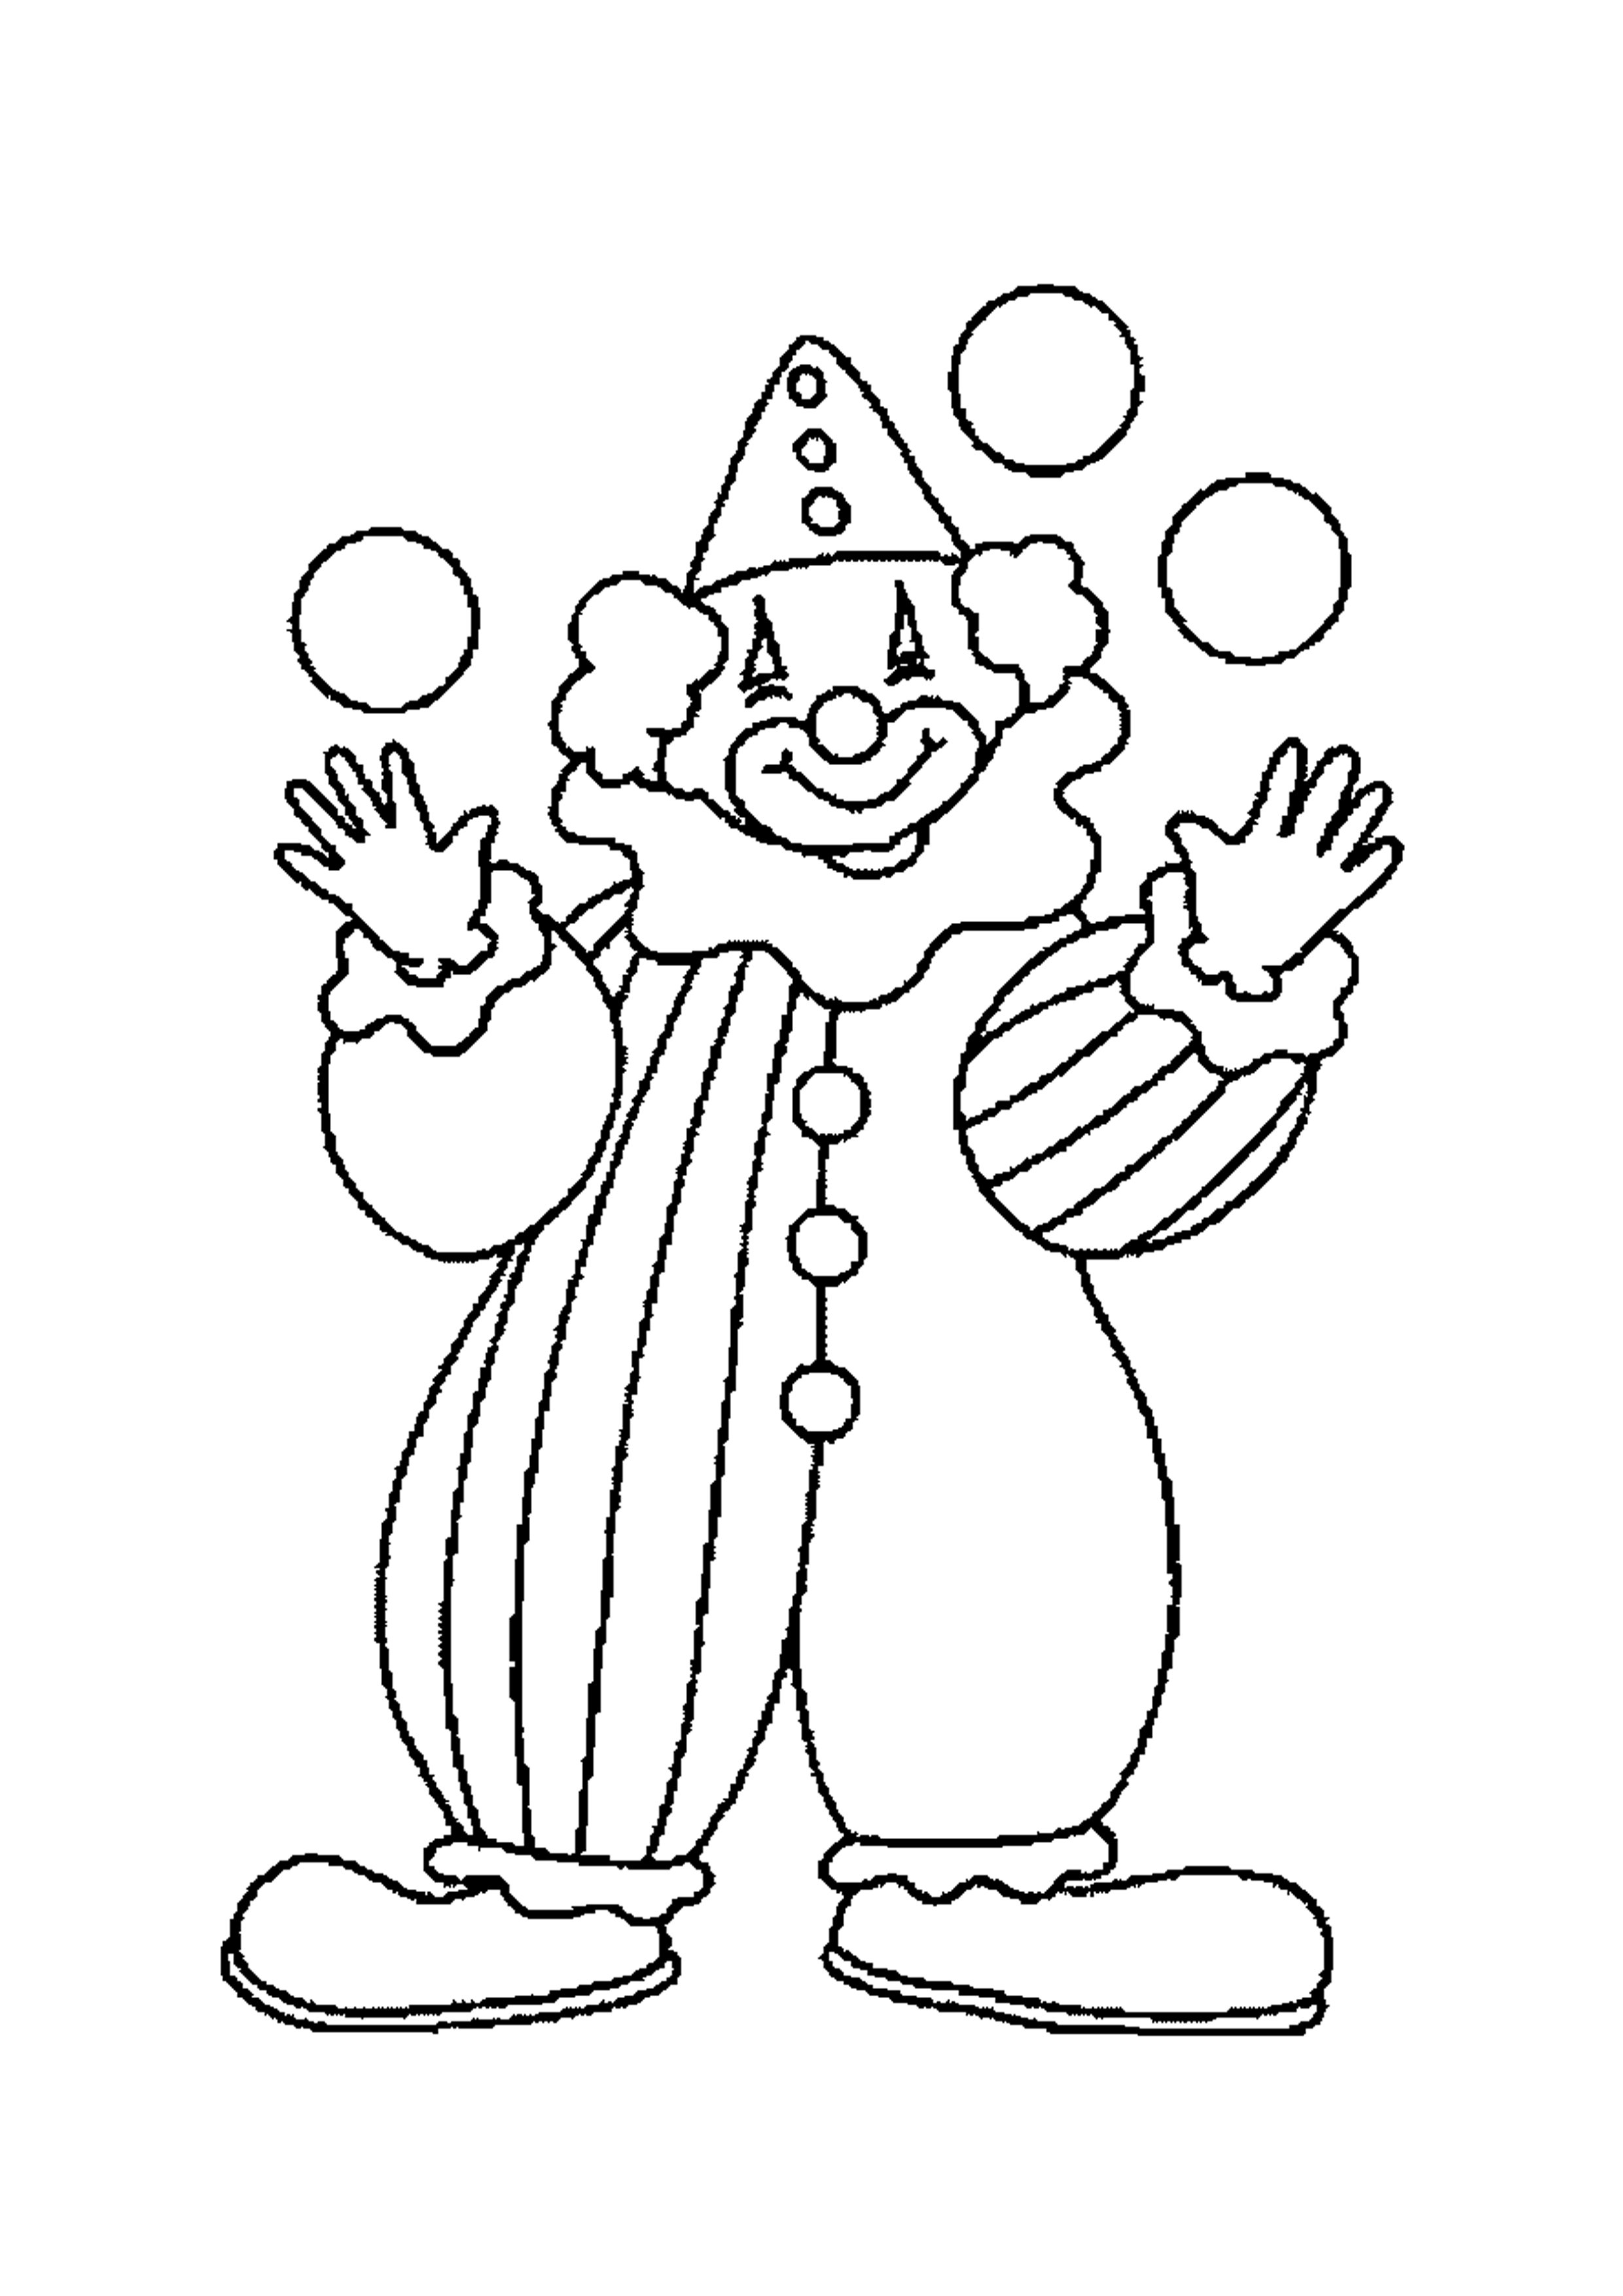 Клоун раскраска для детей 4 5. Клоун жонглер раскраска. Клоун раскраска для детей. Клон раскраска для детей. Веселый клоун раскраска.